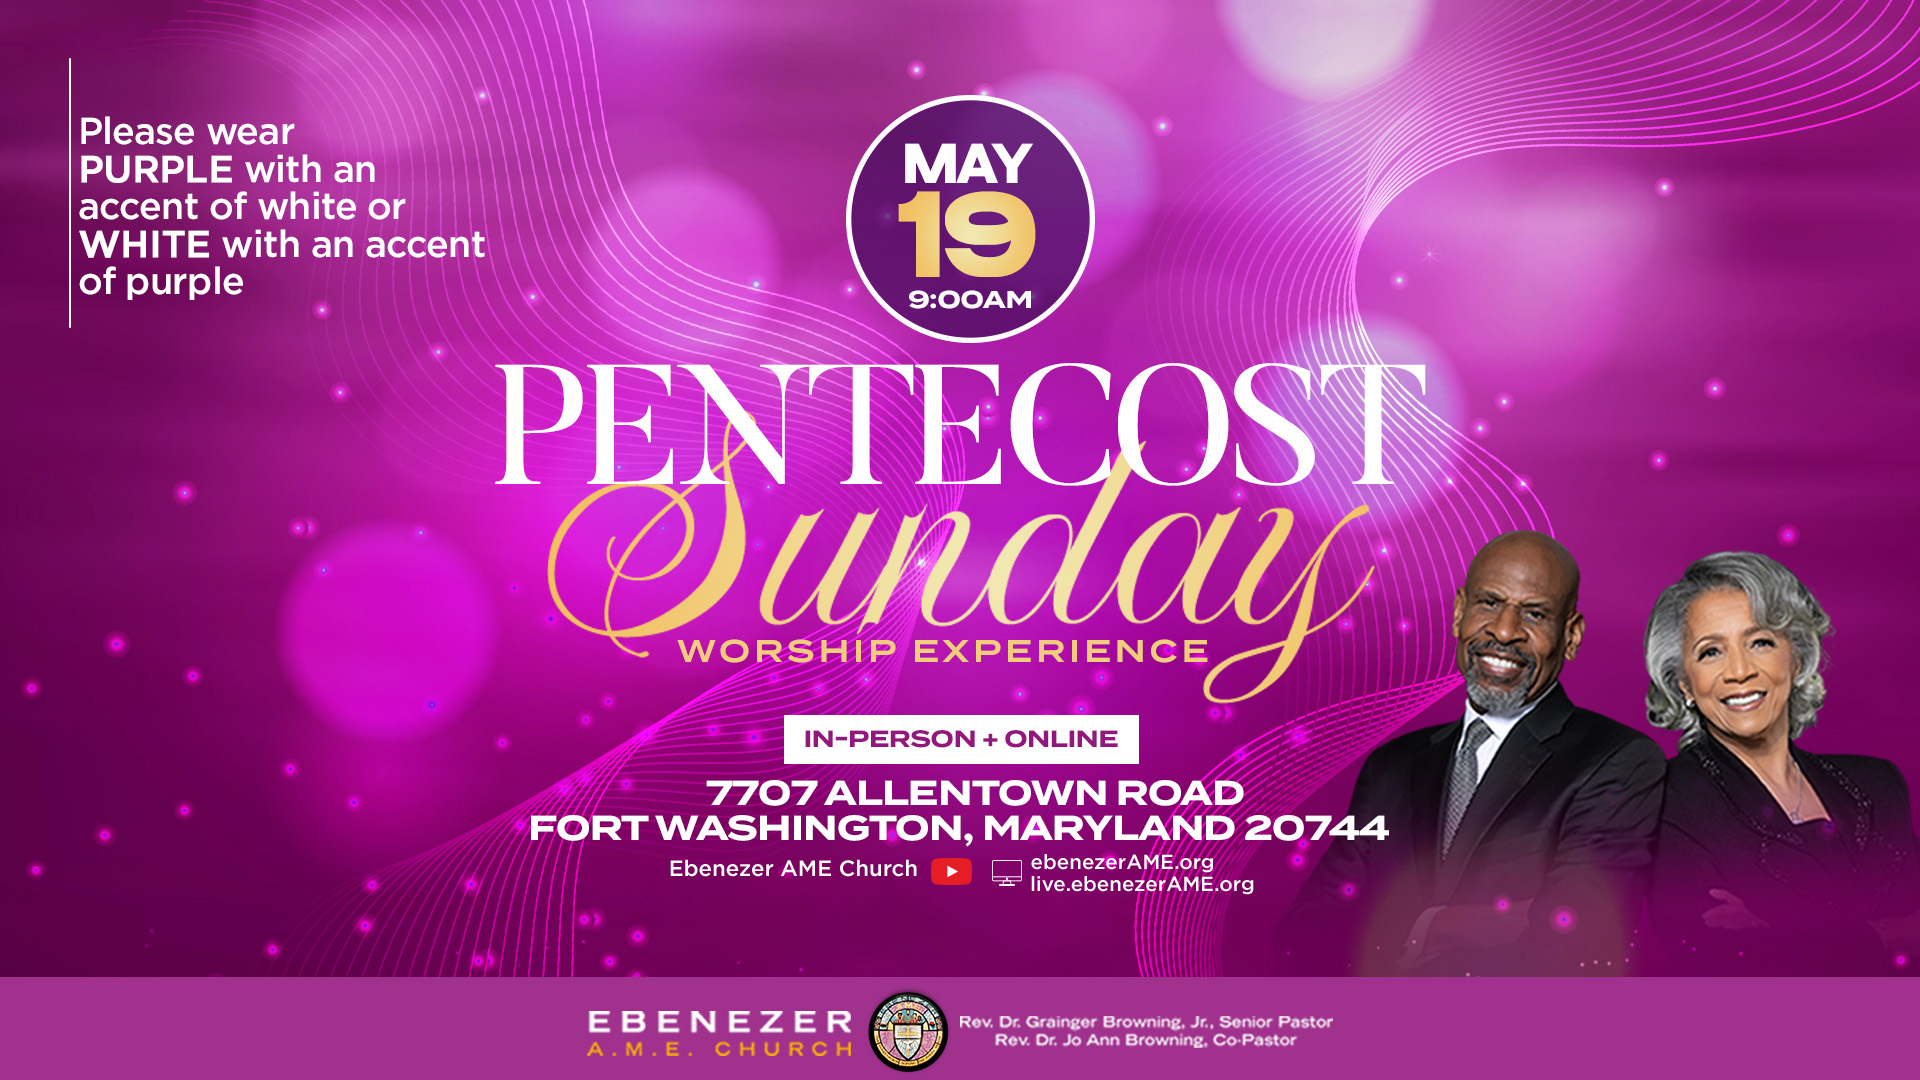 Pentecost Sunday wear white or purple